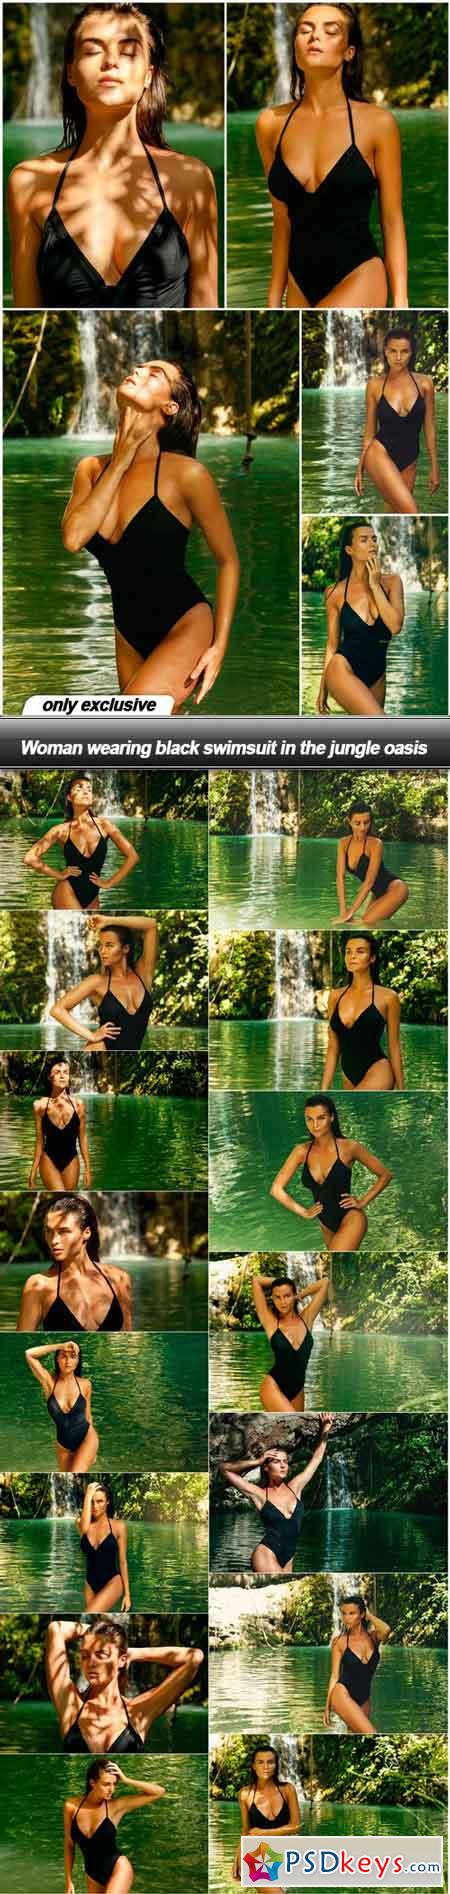 Woman wearing black swimsuit in the jungle oasis - 20 UHQ JPEG